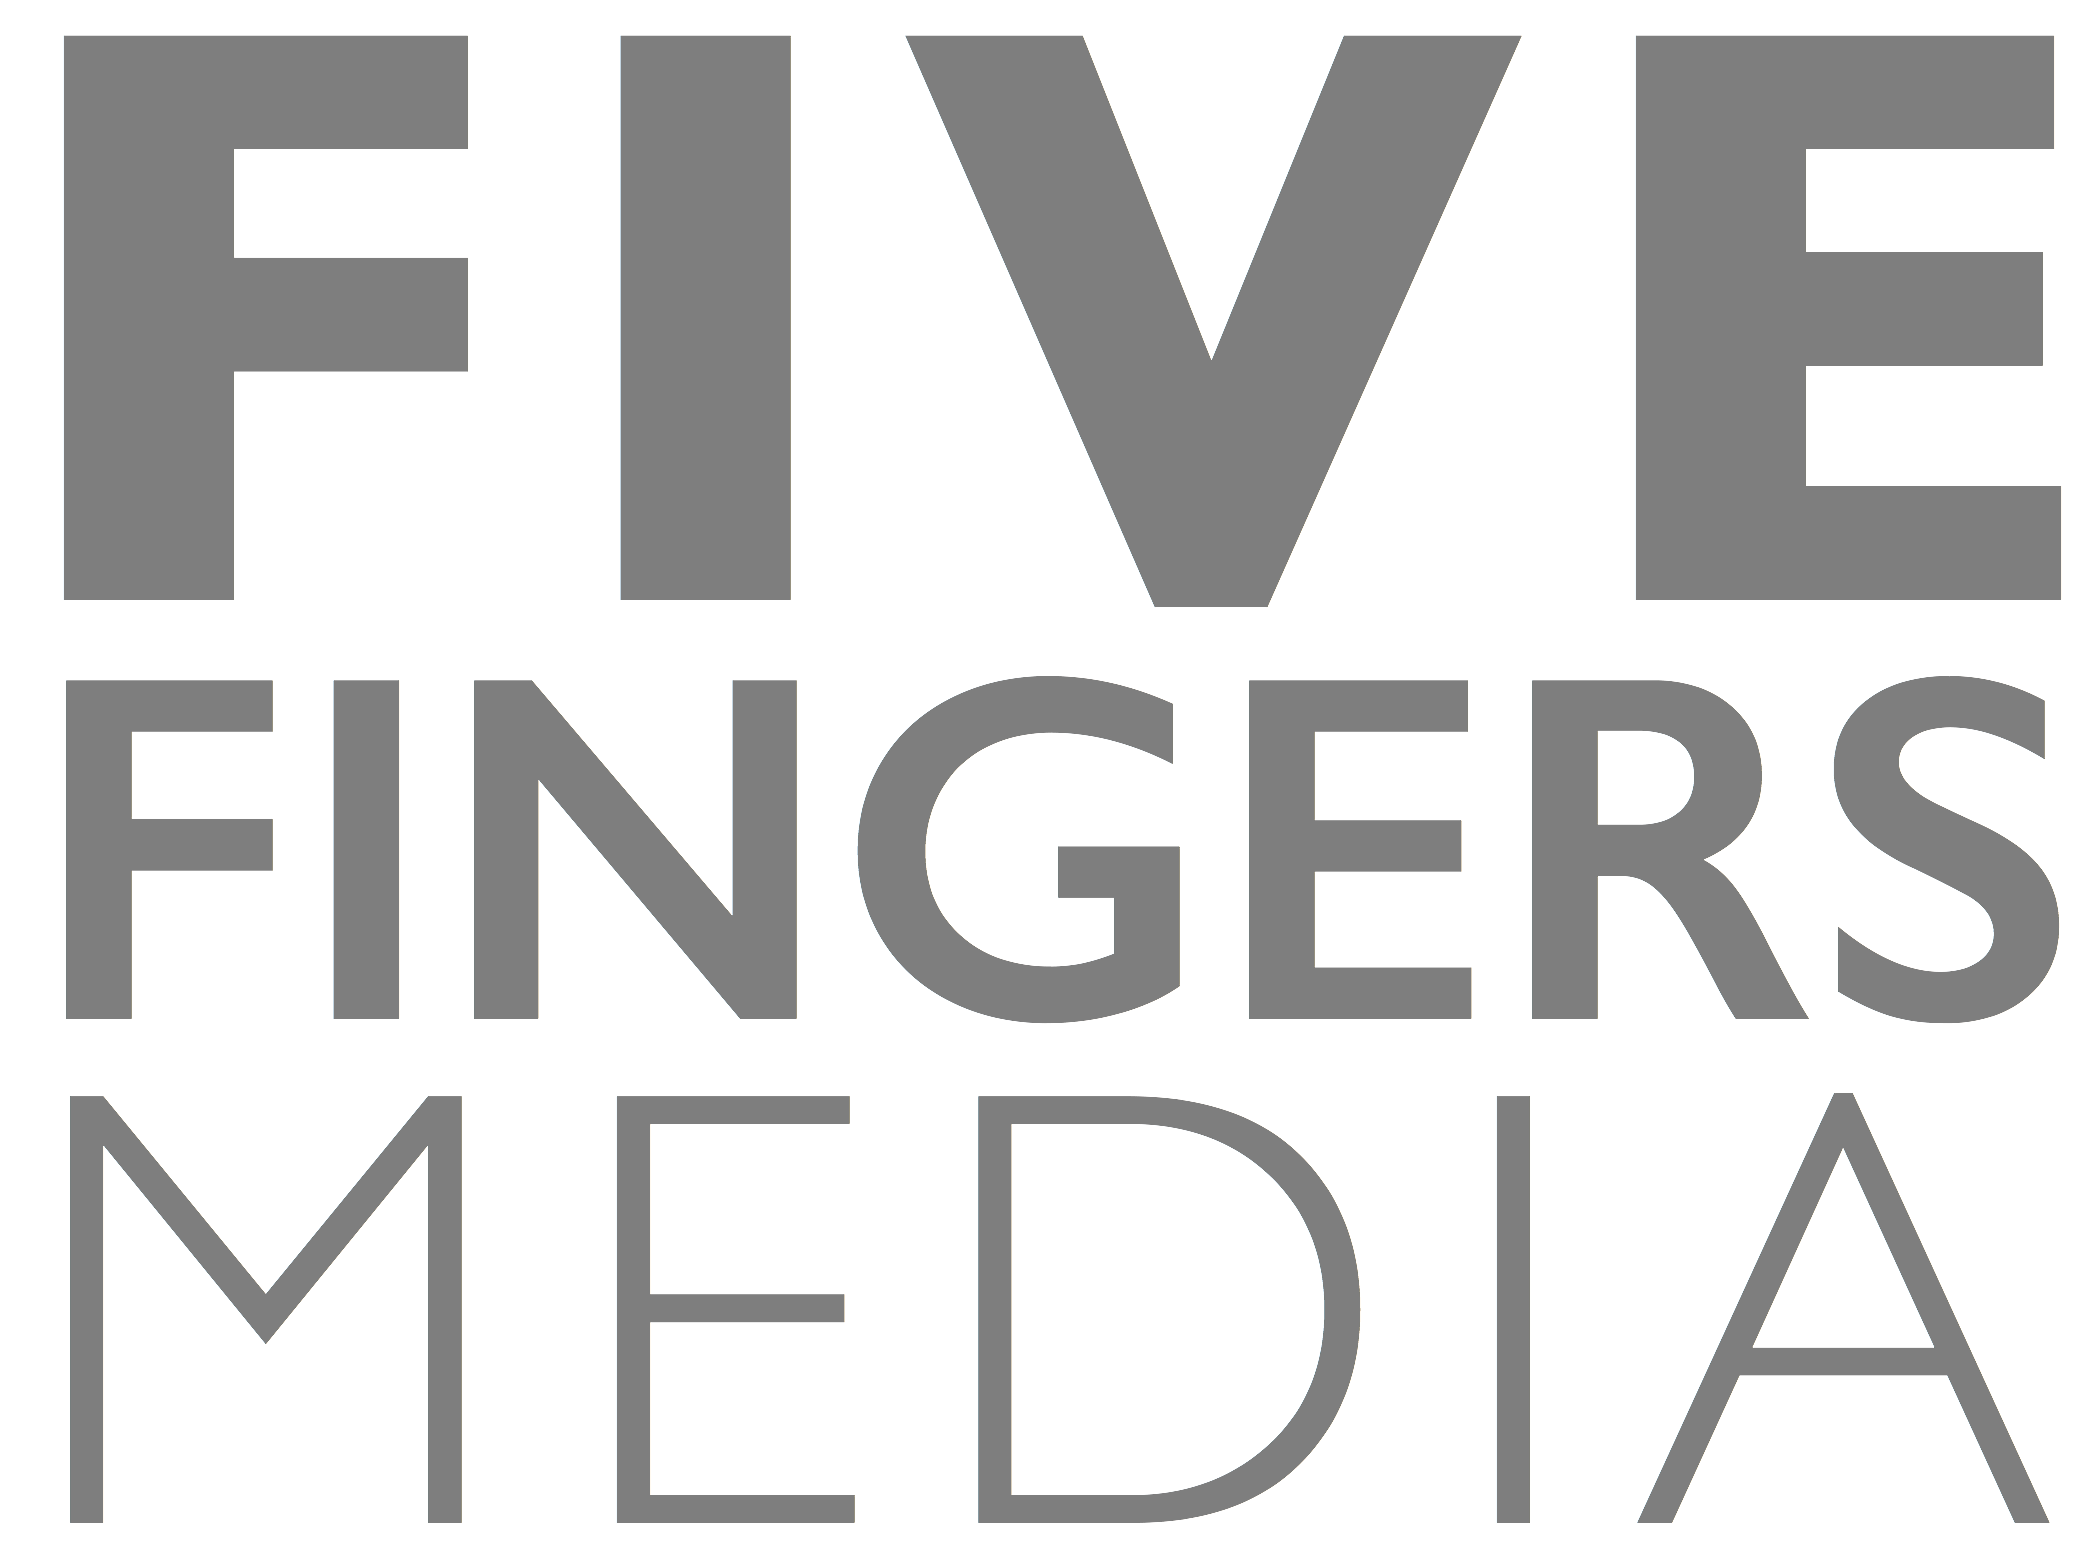 Five Fingers Media